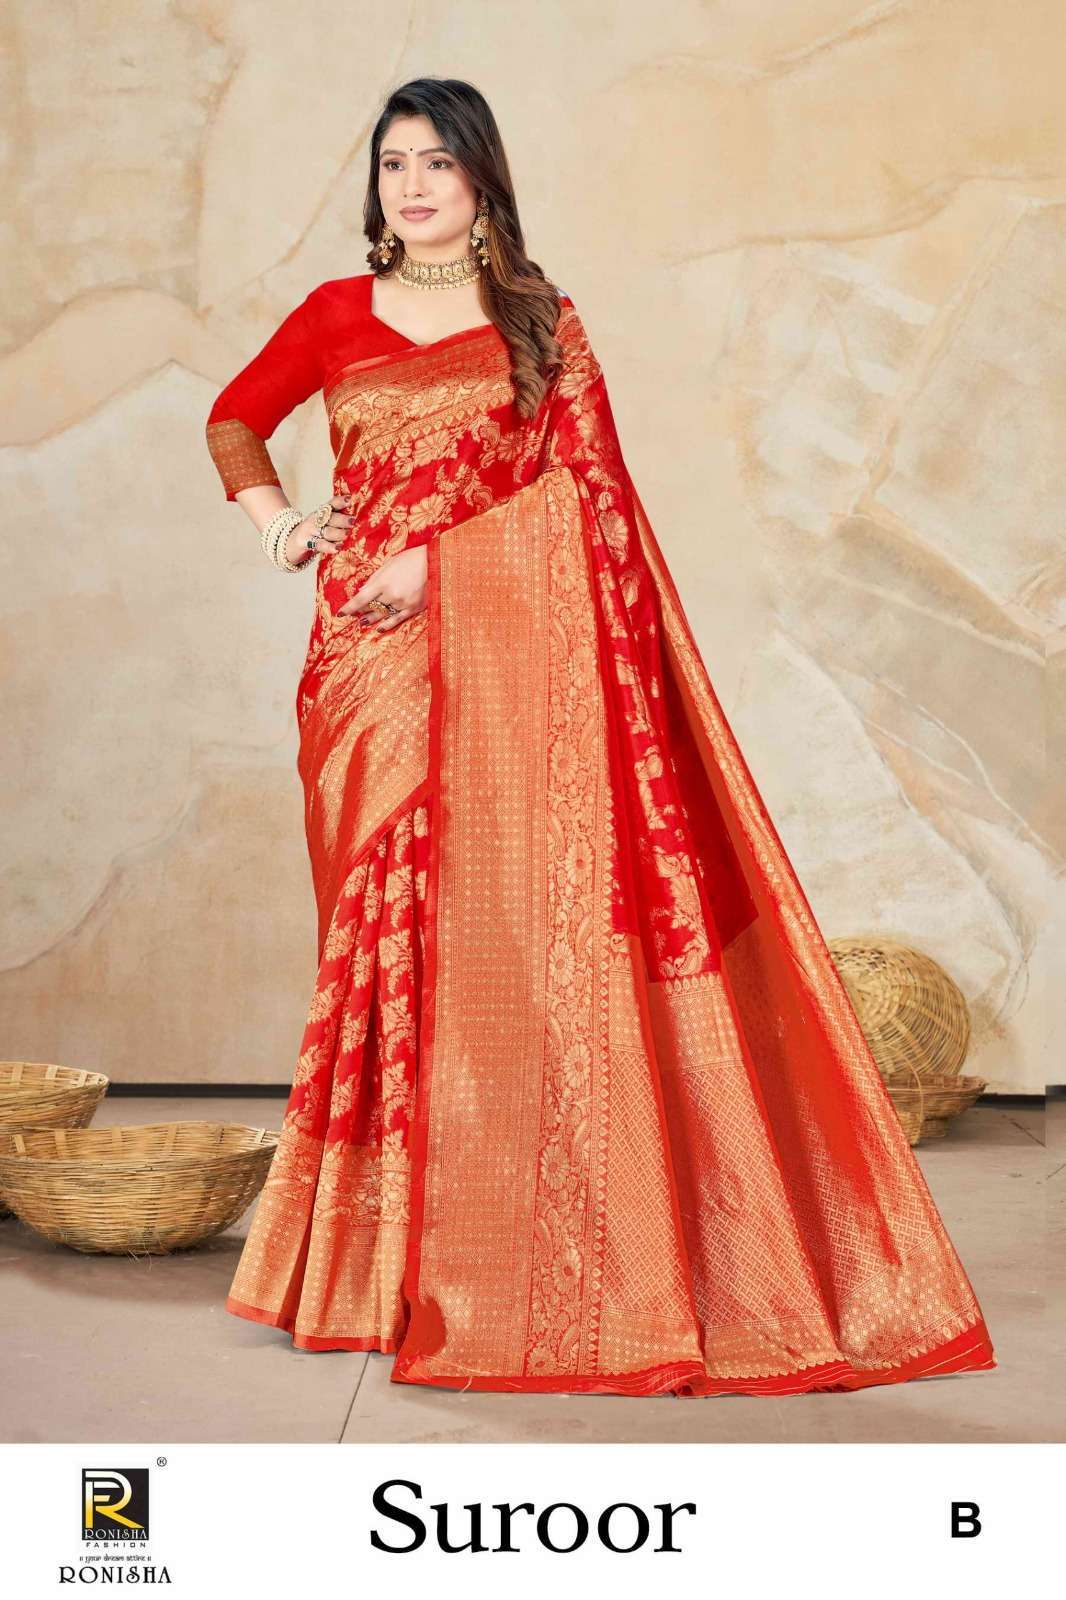 Ronisha fashion Banarasi Silk Saree Wholesaler of Saree in Surat